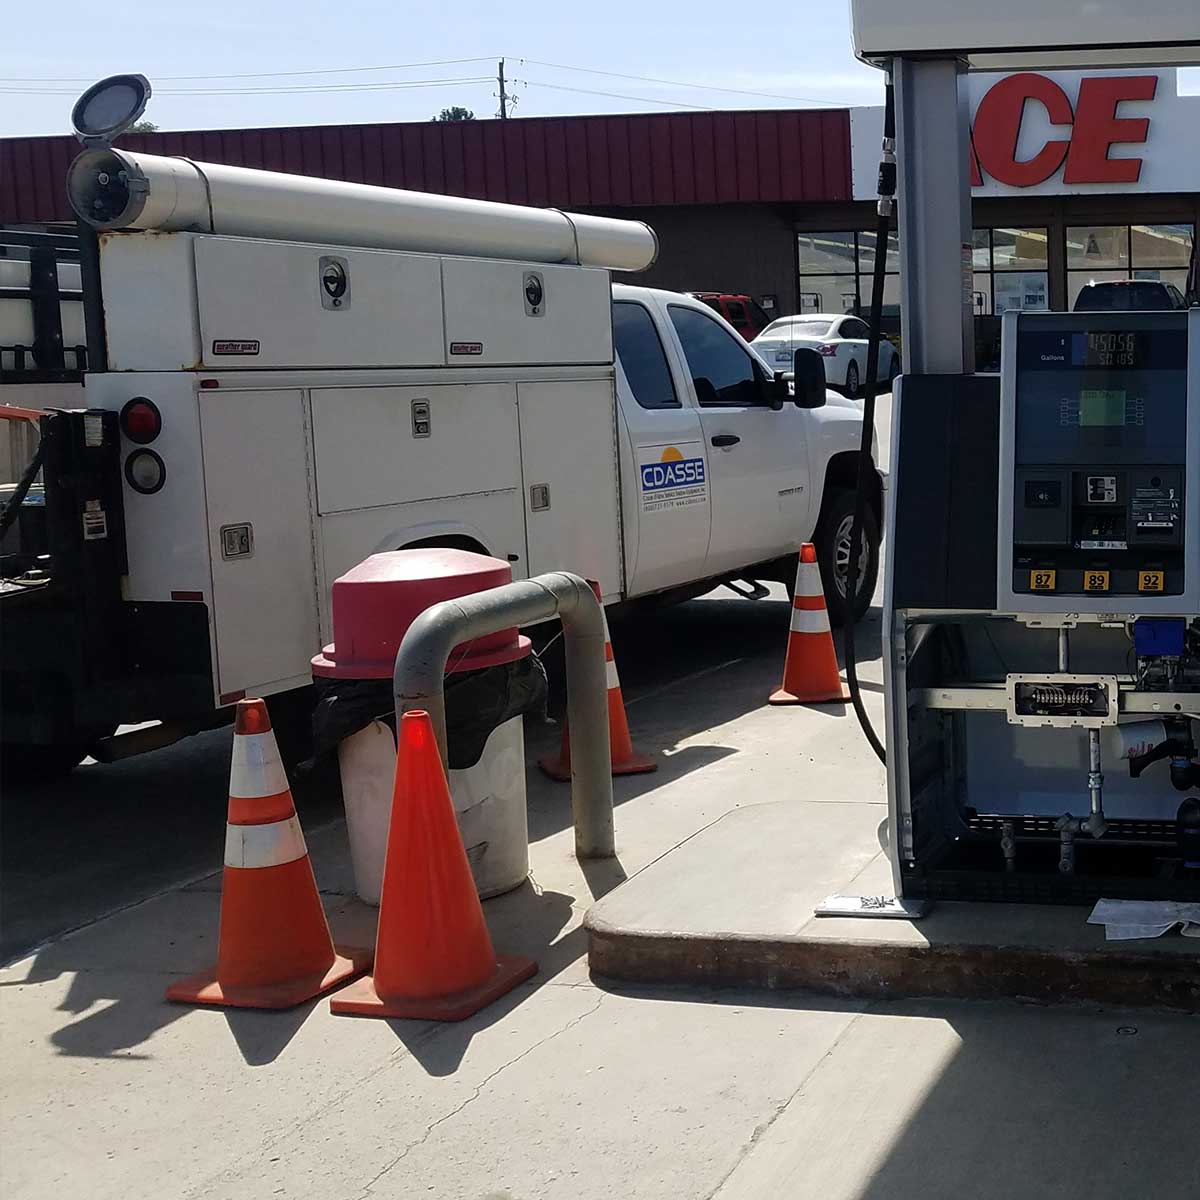 Servicing a Gas Pump - Coeur d'Alene Service Station Equipment